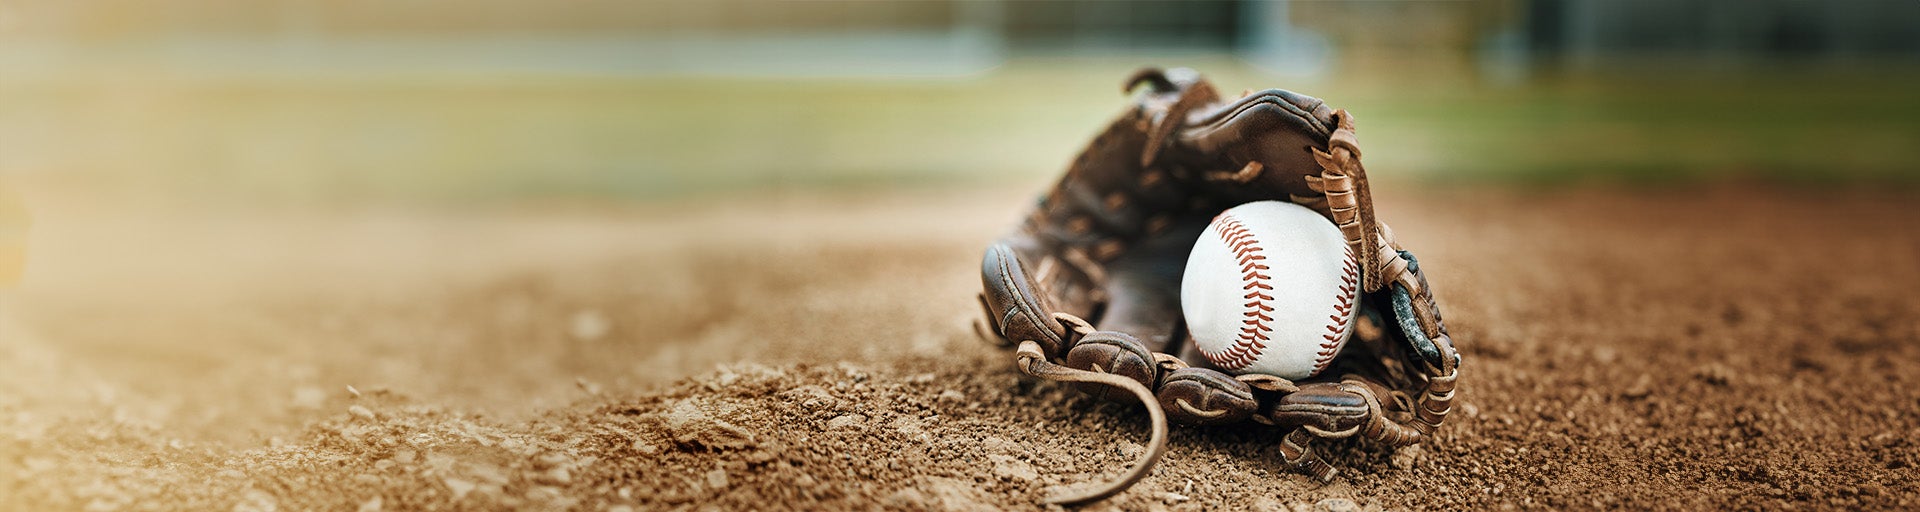 Brown baseball glove holding a white baseball placed on a baseball field.